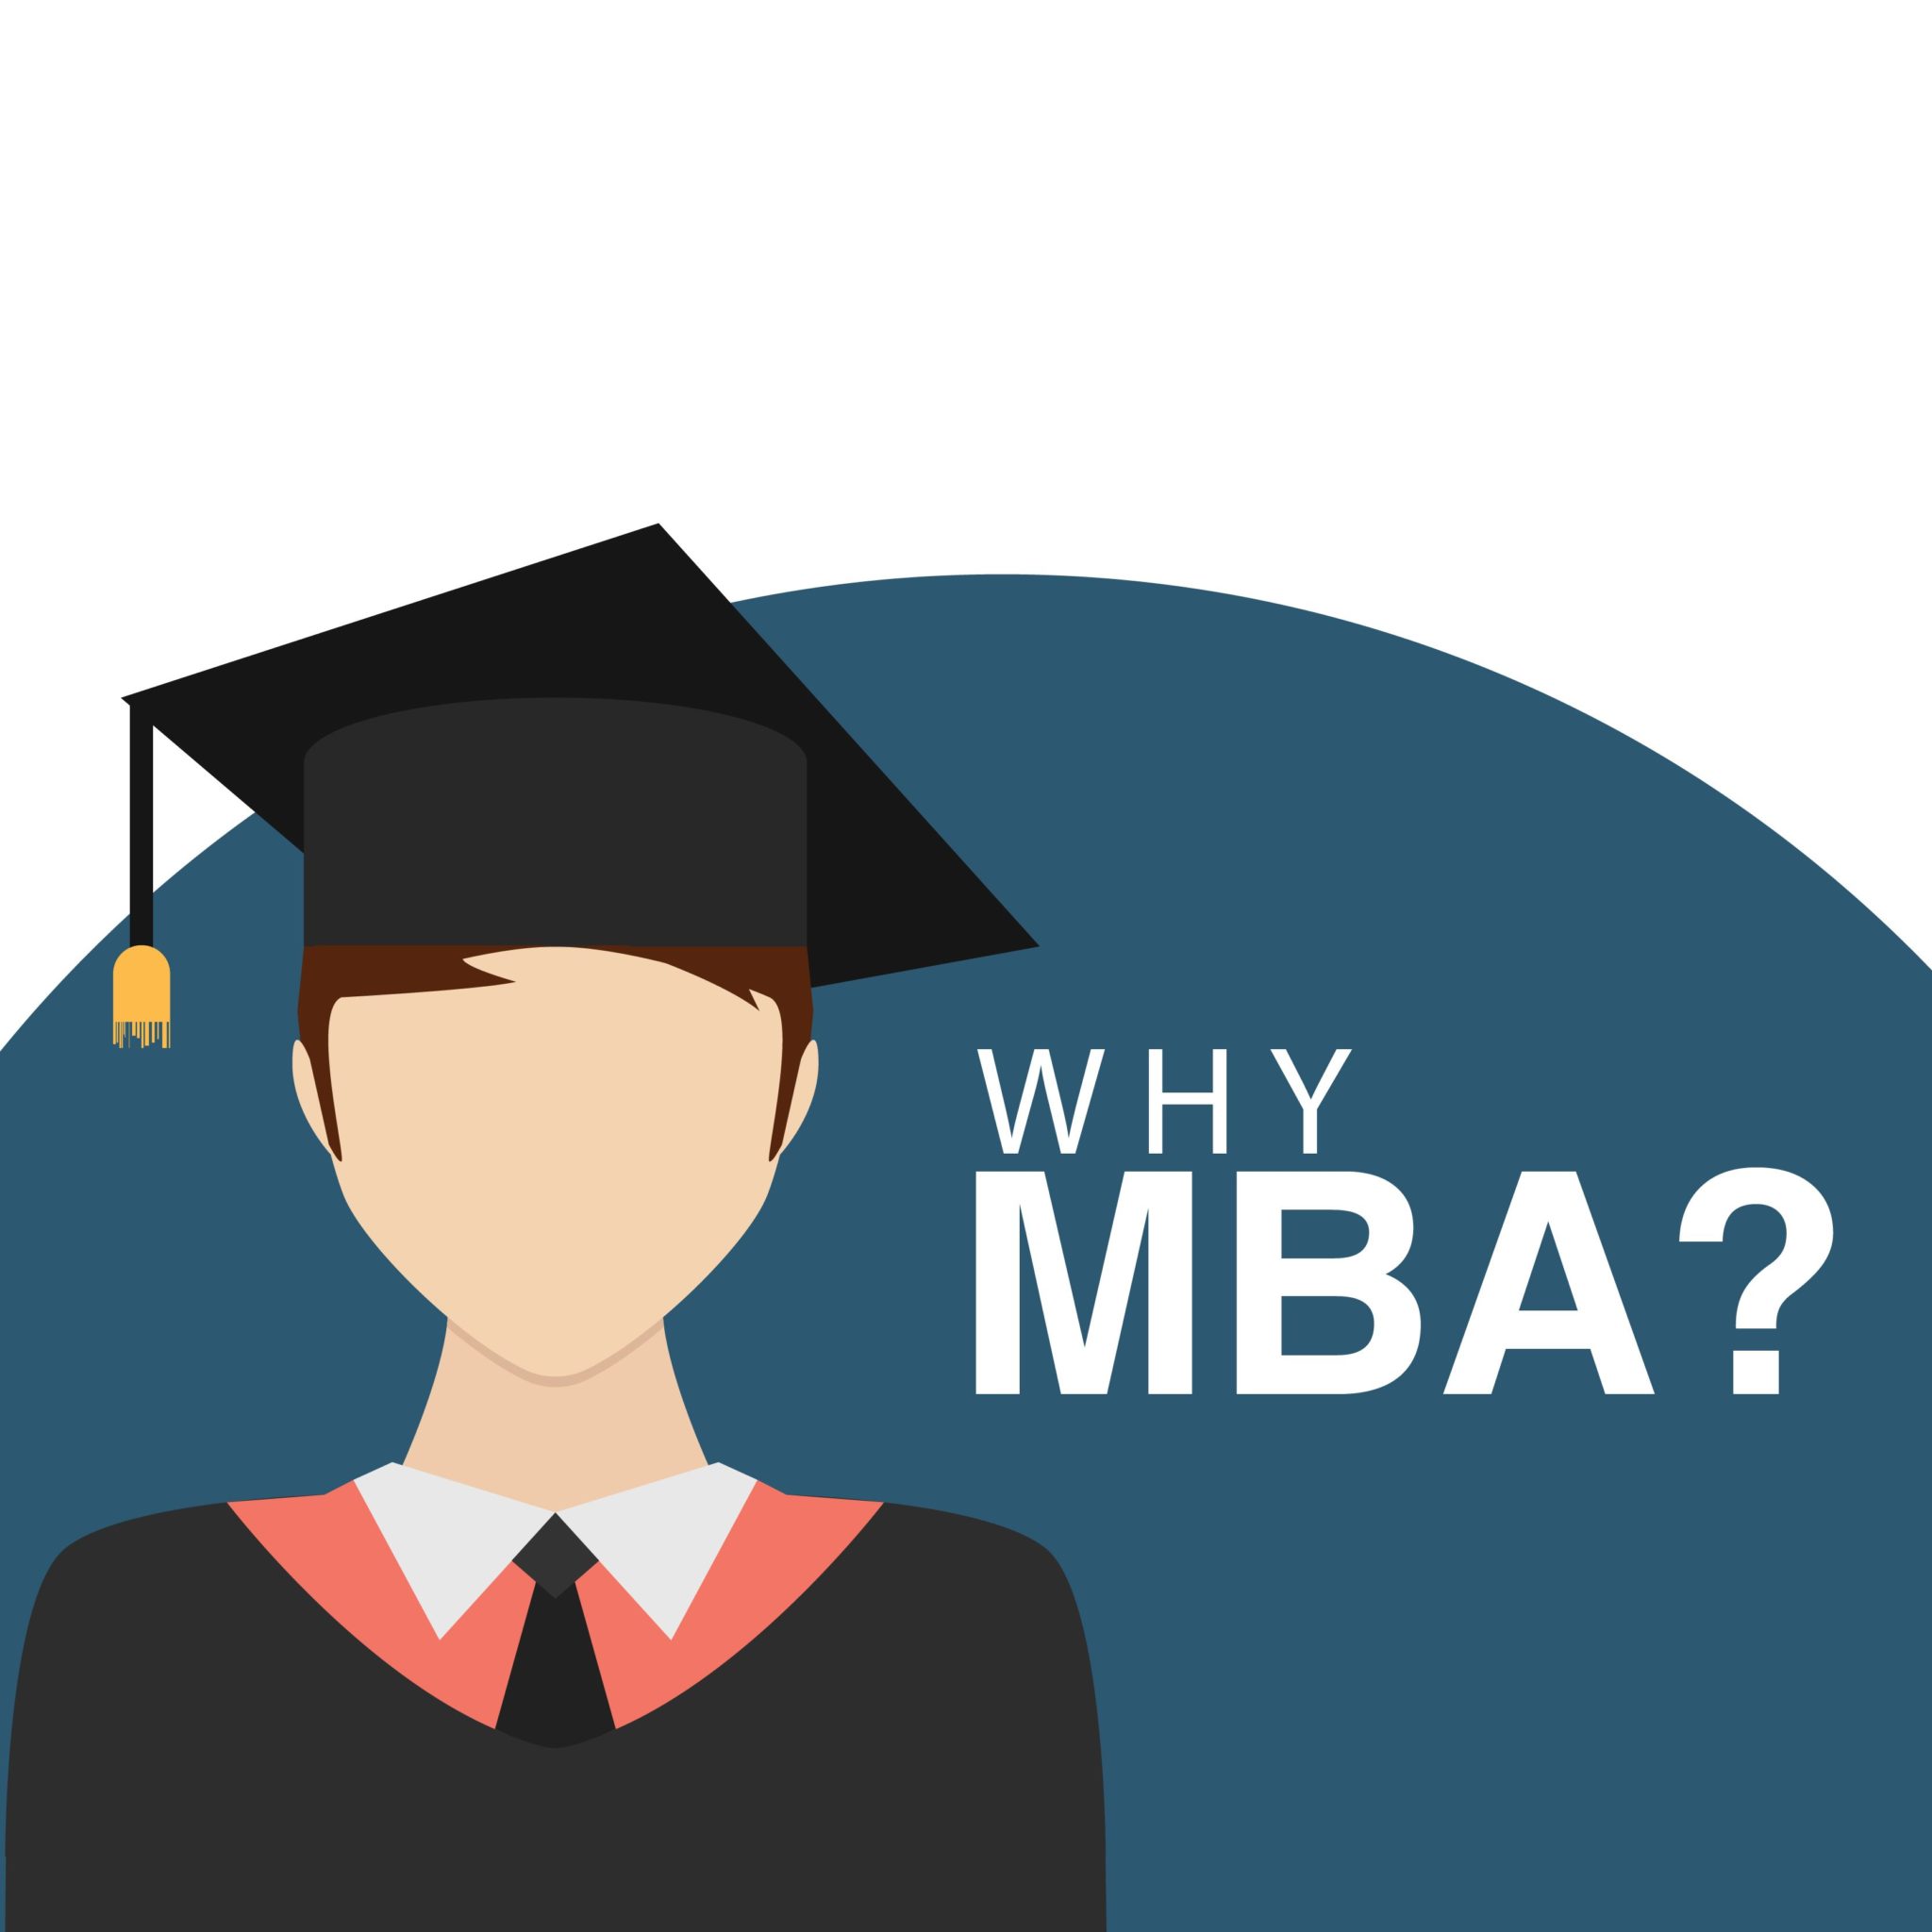 Обучение мба. Бизнес-образование MBA. MBA бизнес. MBA школа бизнеса. MBA обучение.